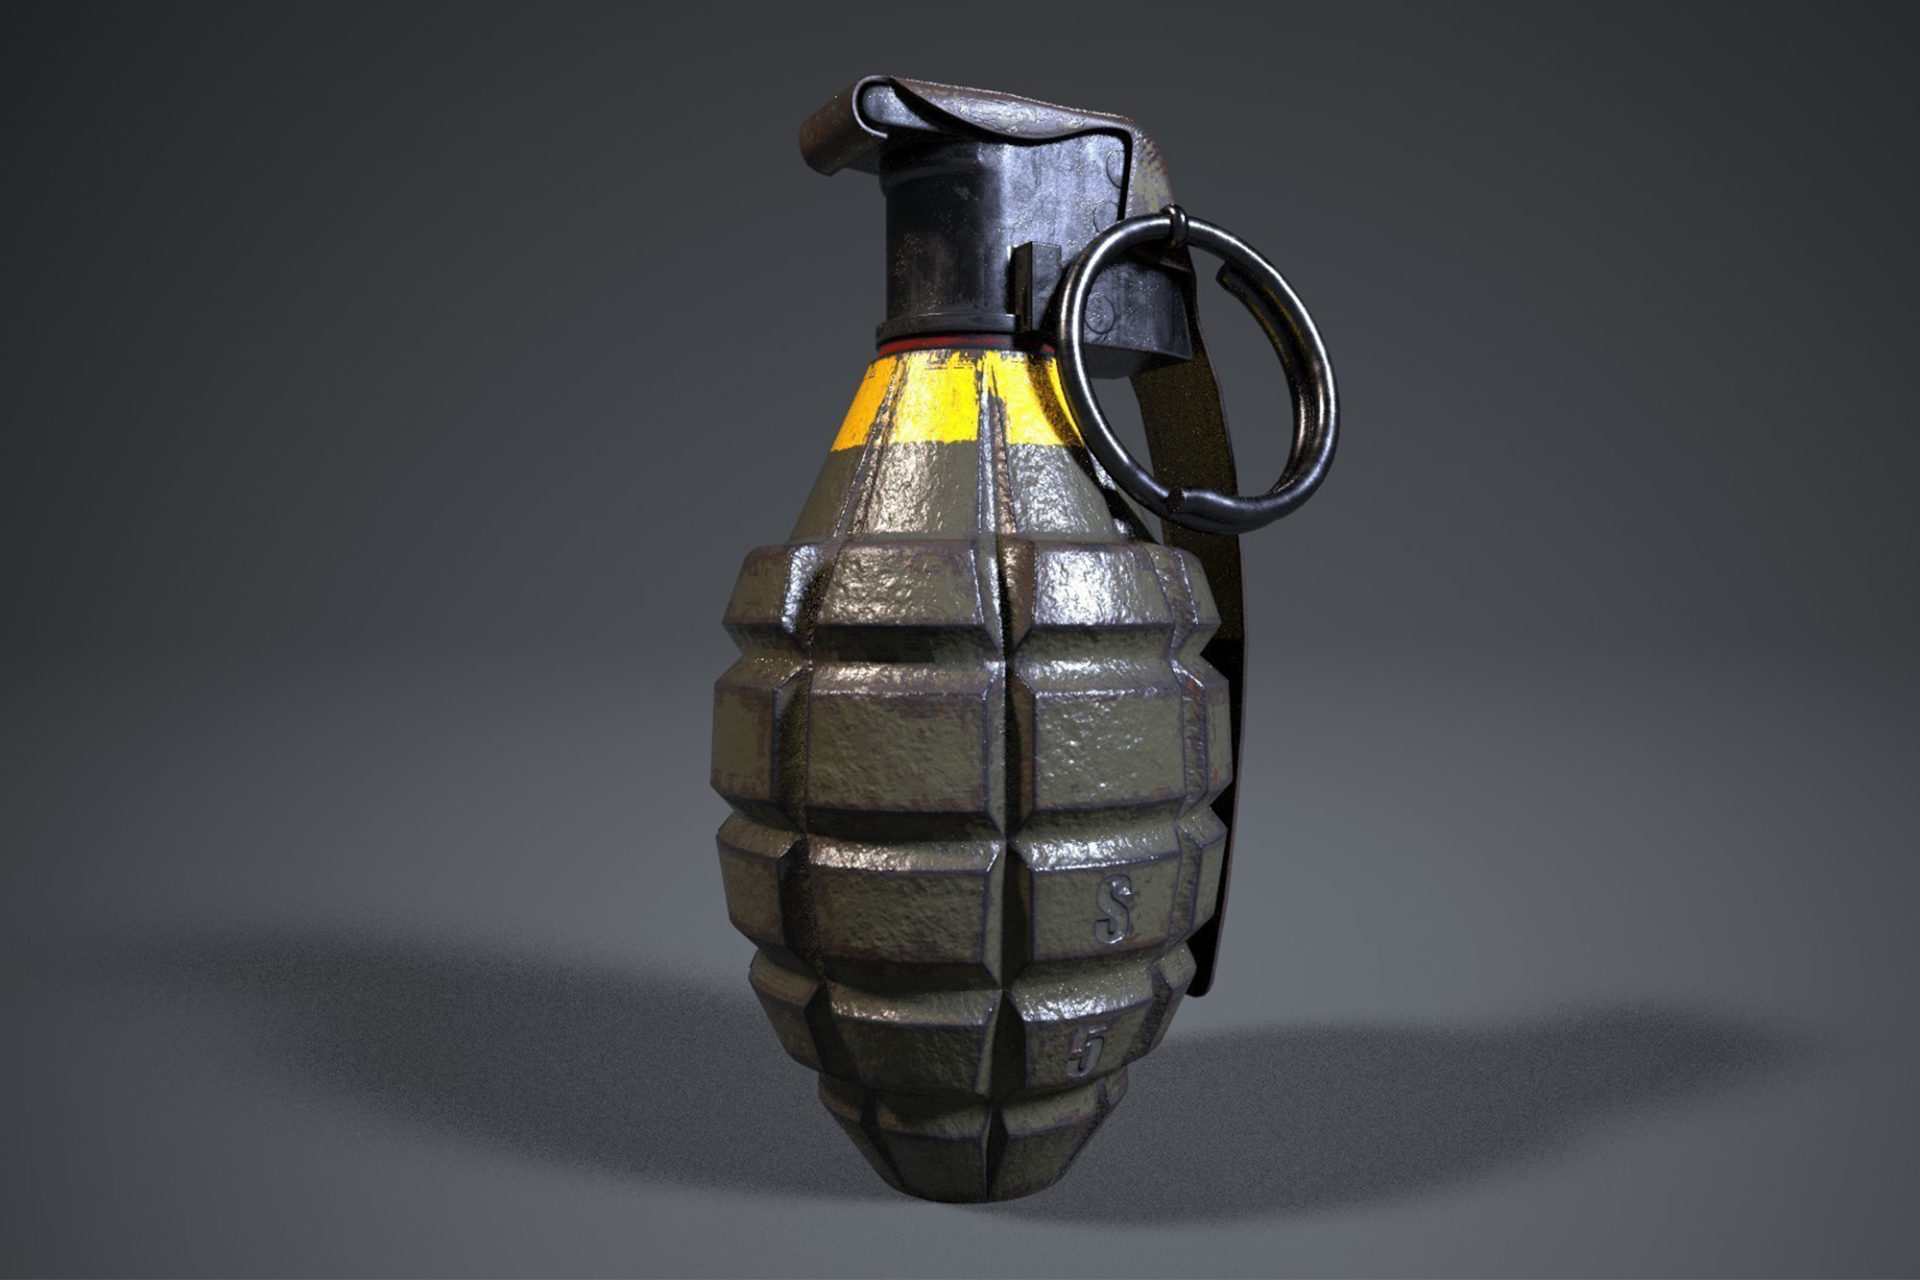 Grenade (souce : wallpaperplay)